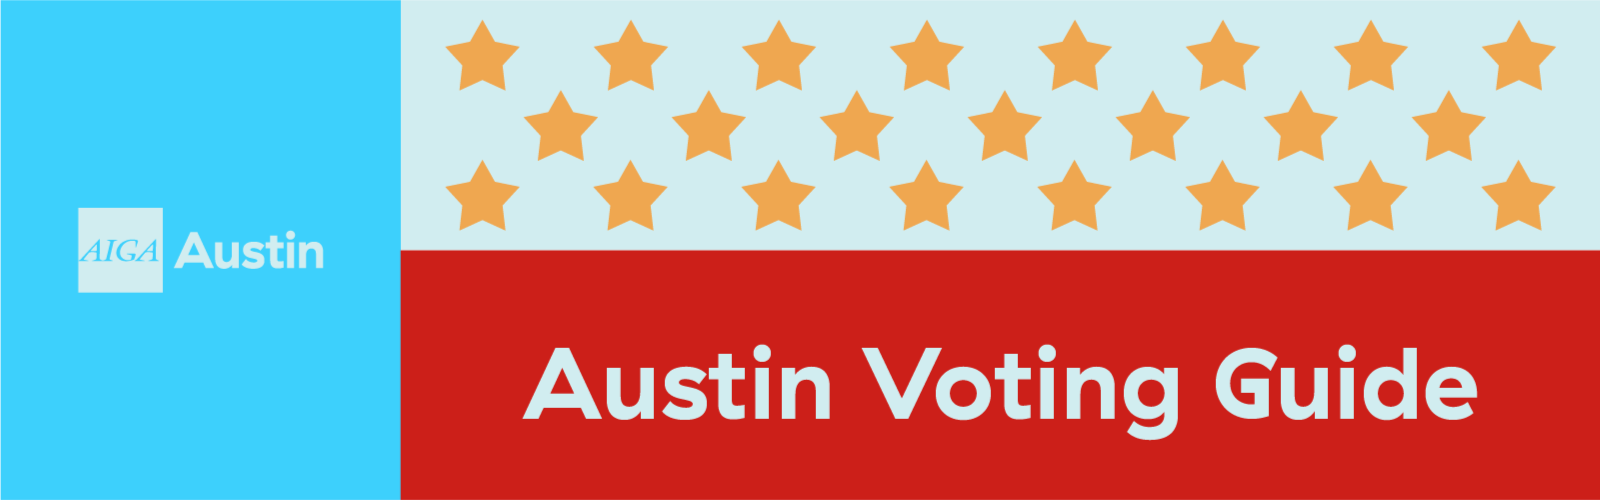 AIGA Austin Voting Guide